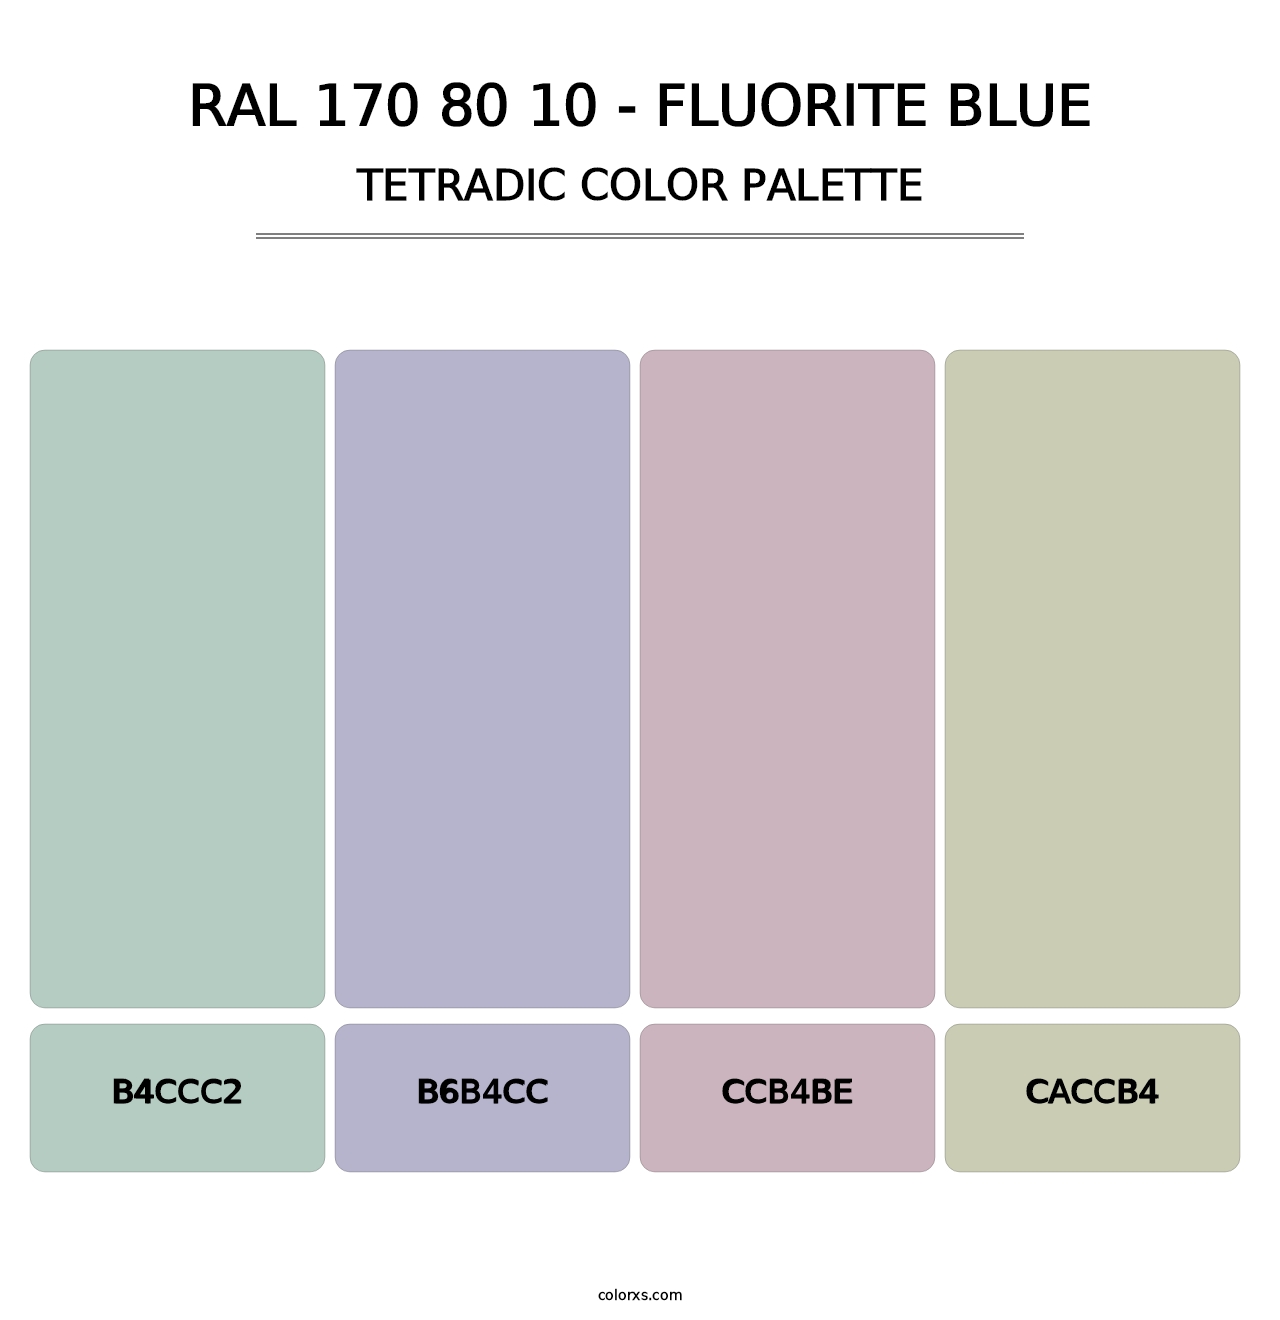 RAL 170 80 10 - Fluorite Blue - Tetradic Color Palette